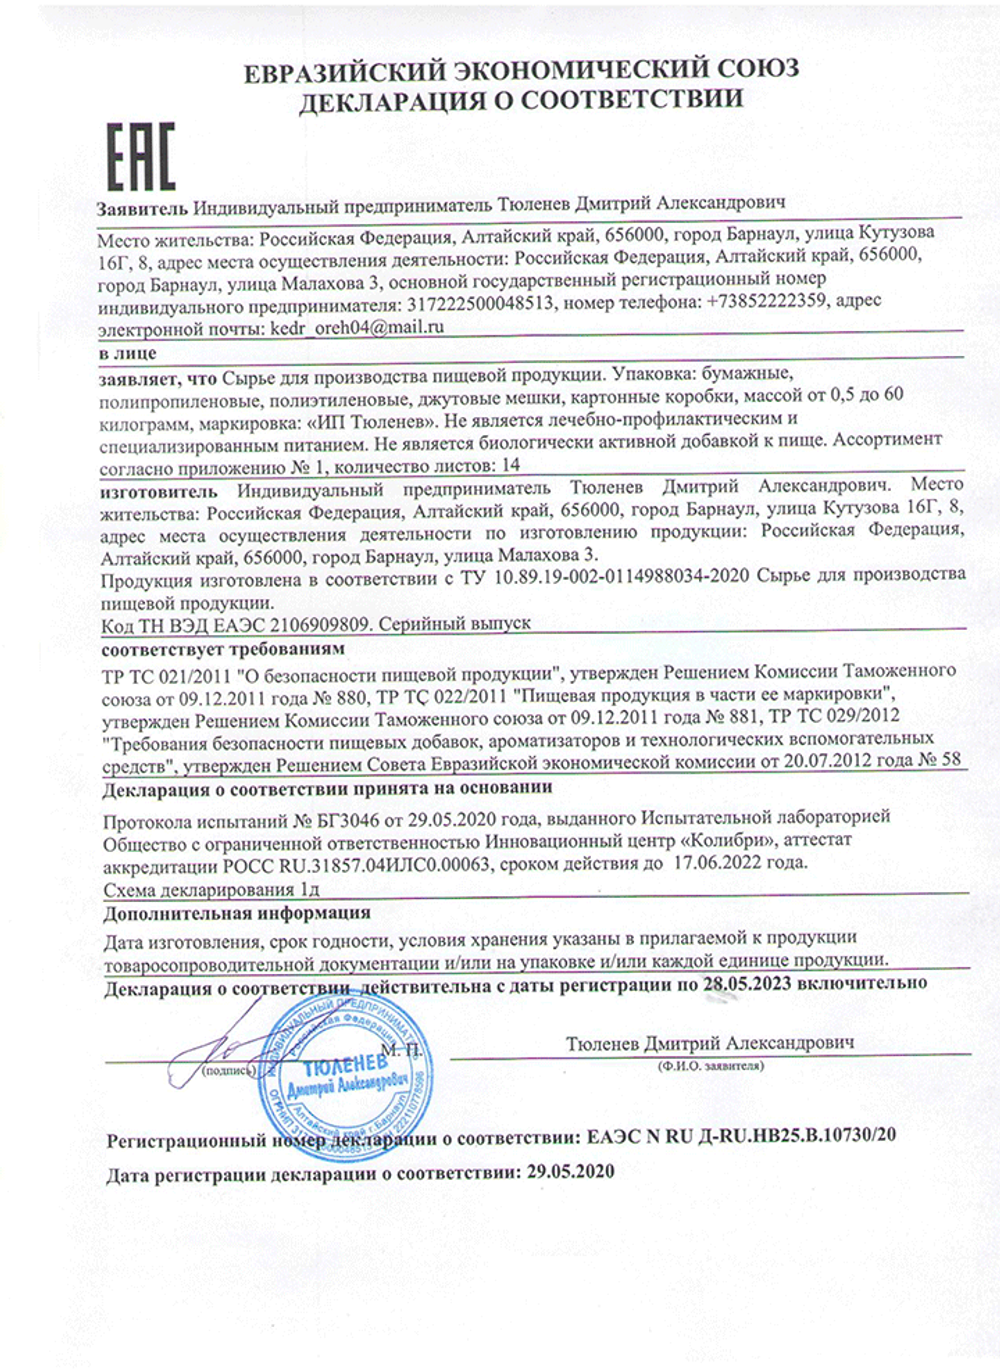 Изображение сертификата соответствия на траву адониса-adonnis.ru